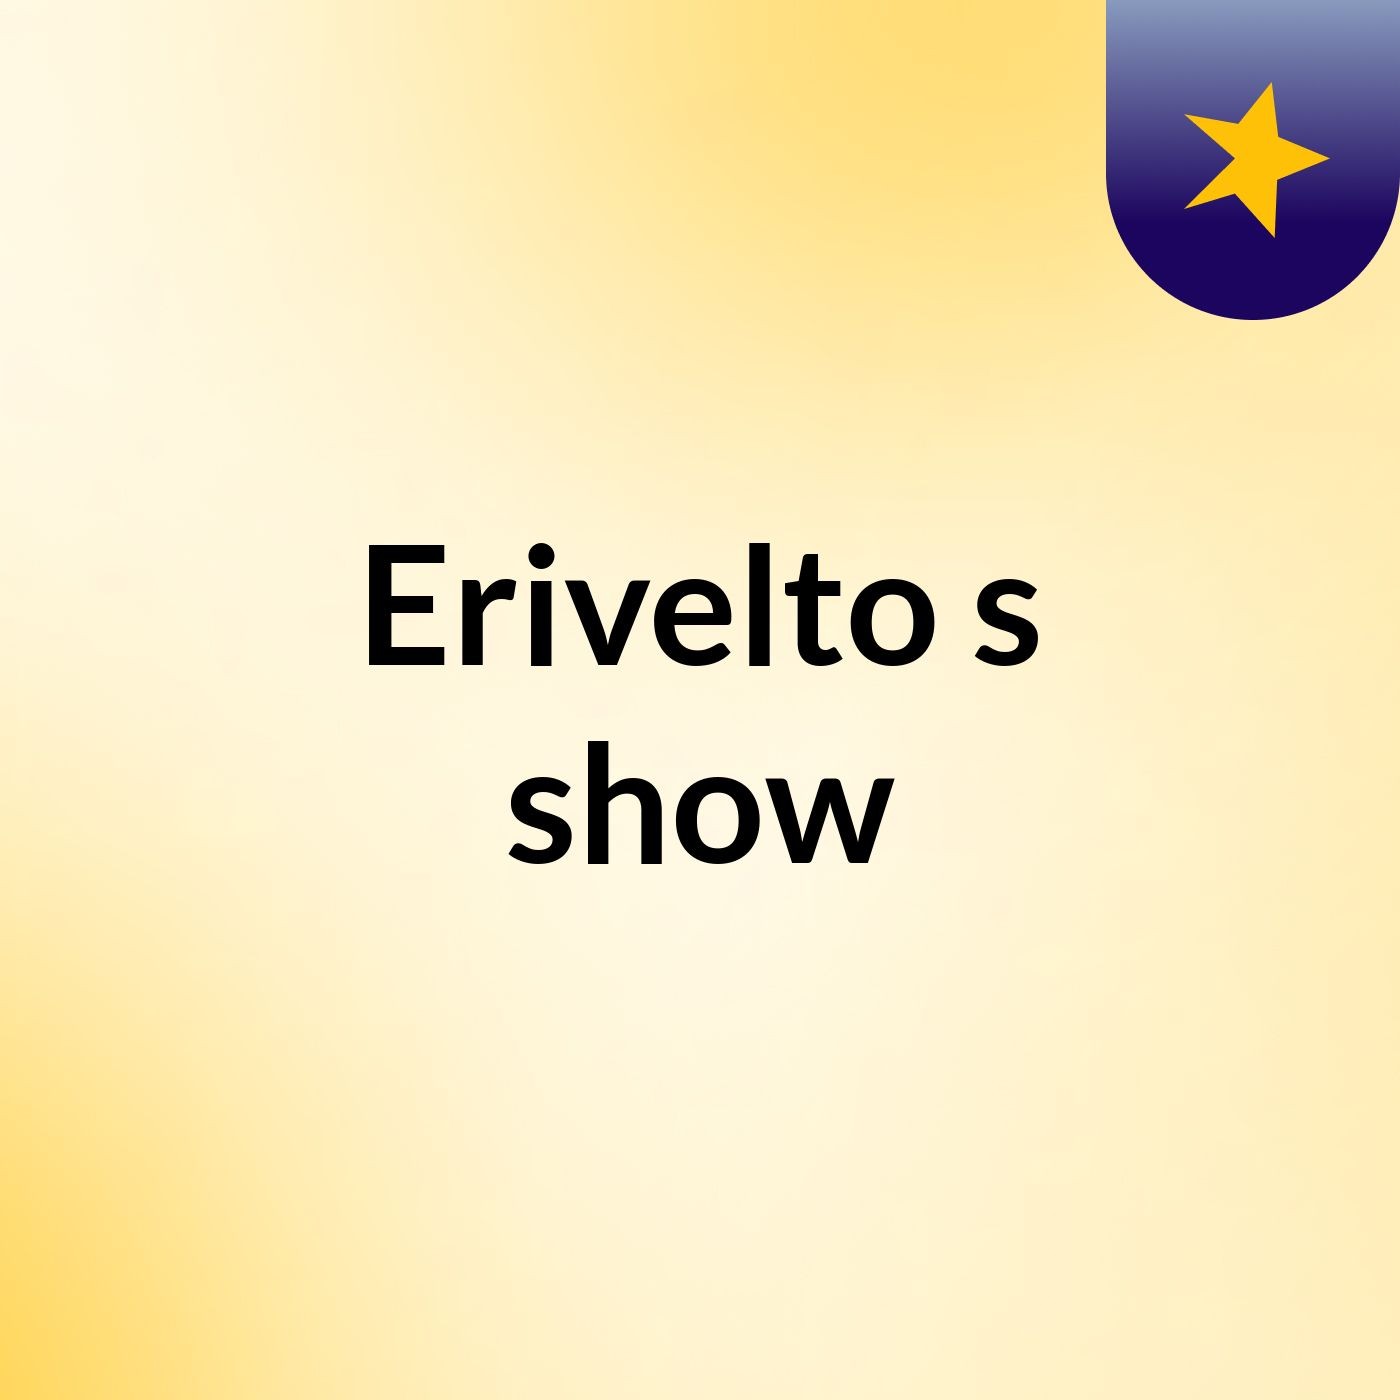 Erivelto's show